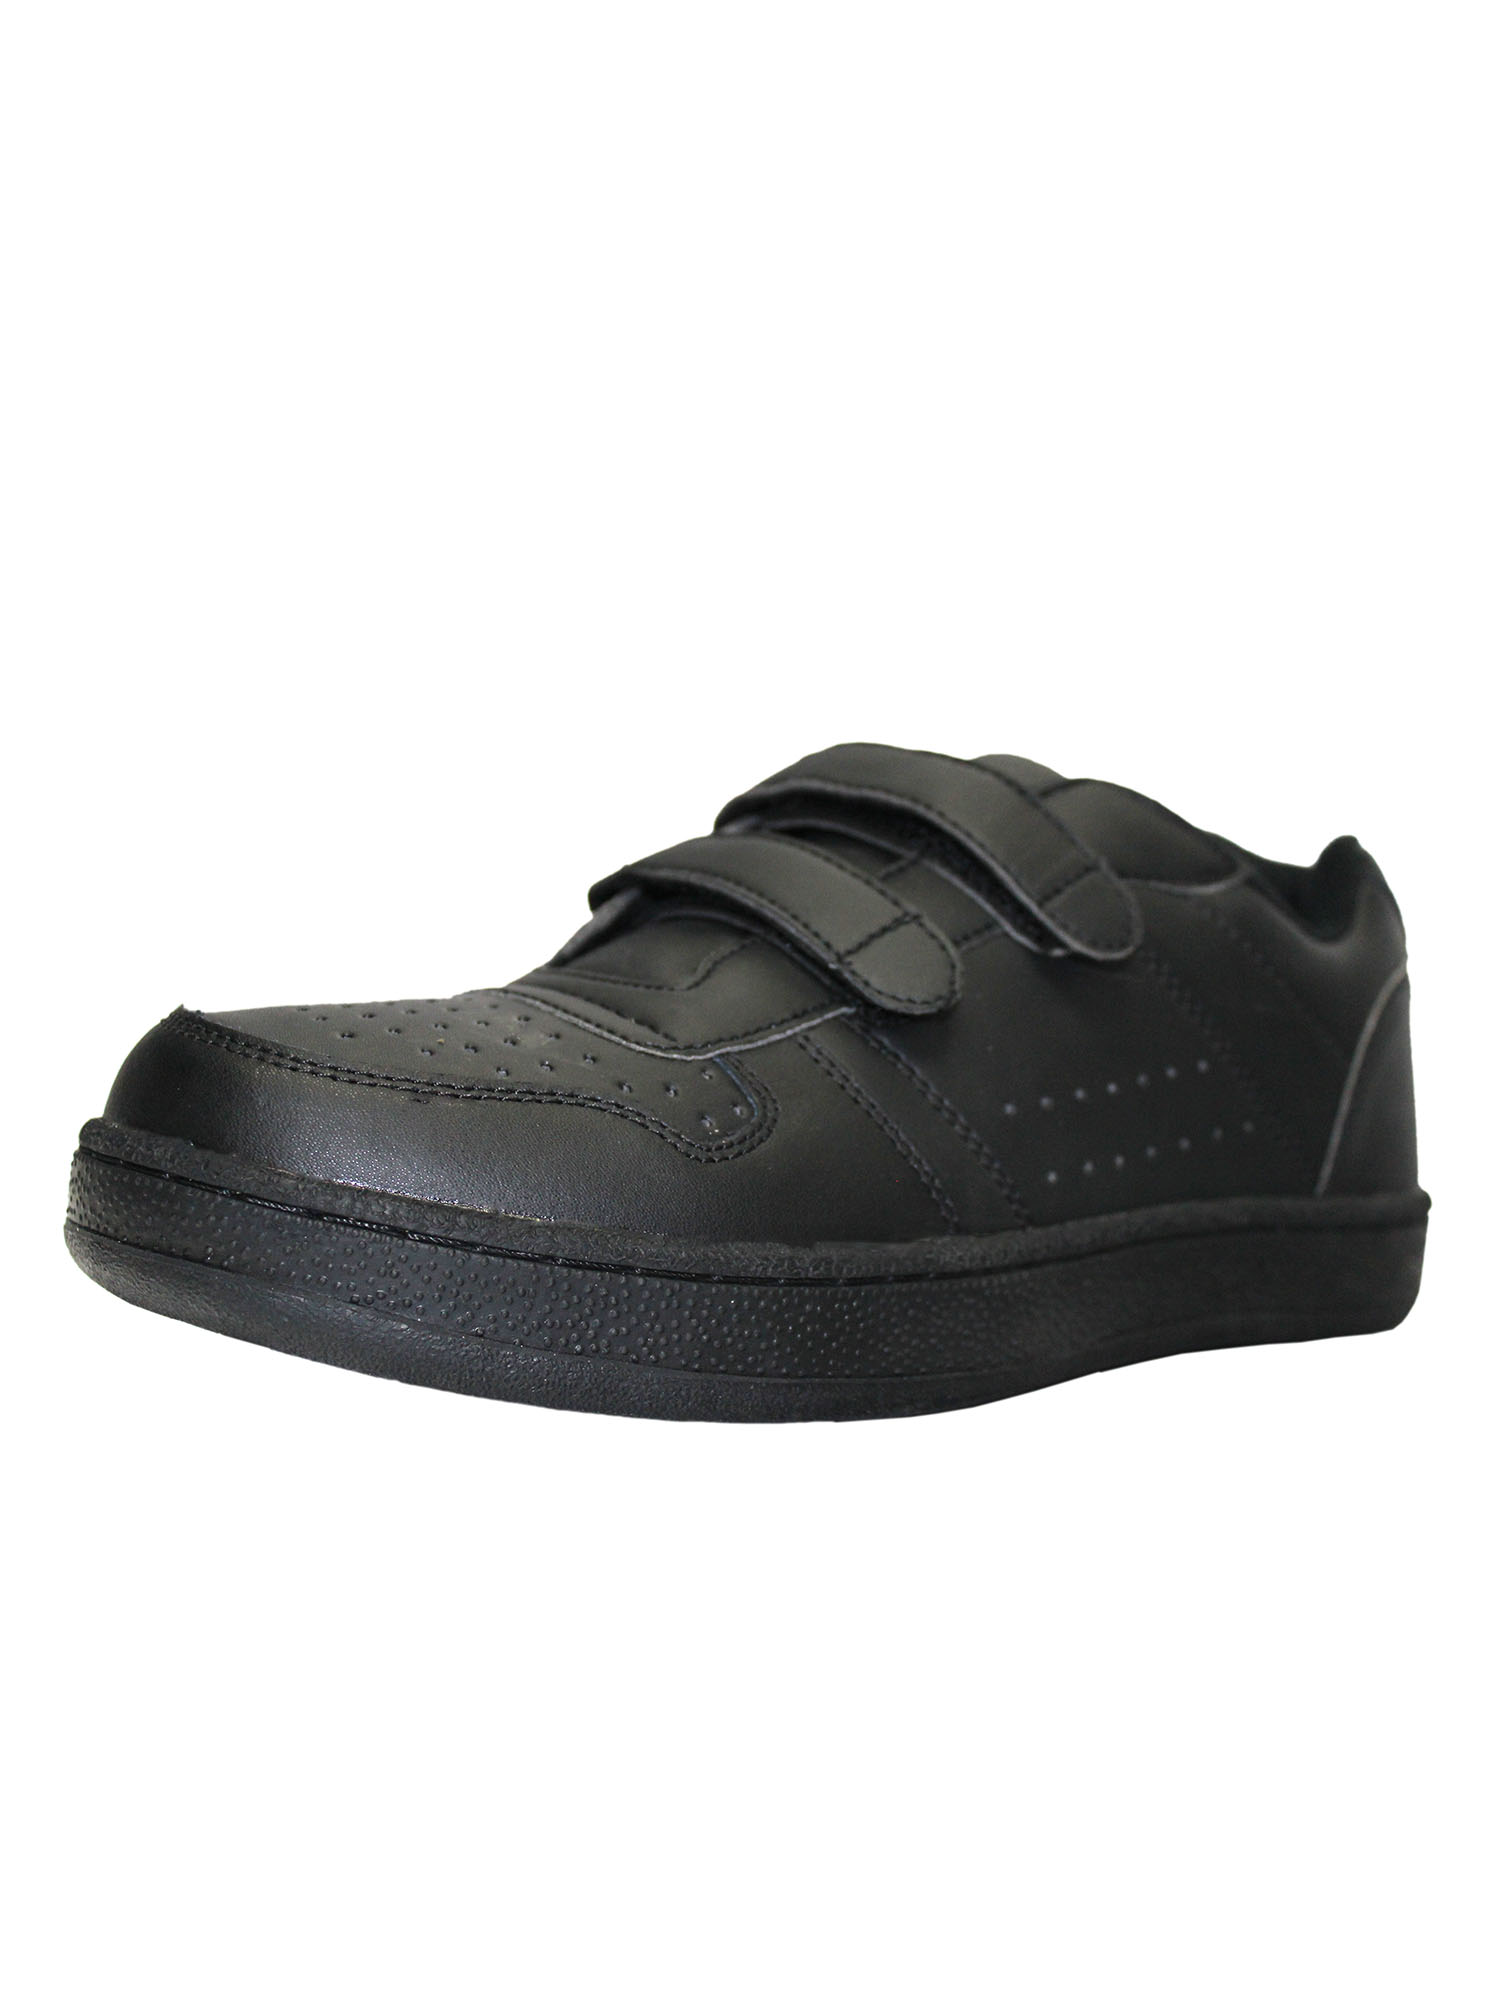 Tanleewa Men's Leather Strap Sneakers Lightweight Hook and Loop Walking Shoe Size 5 Adult Male - image 1 of 4